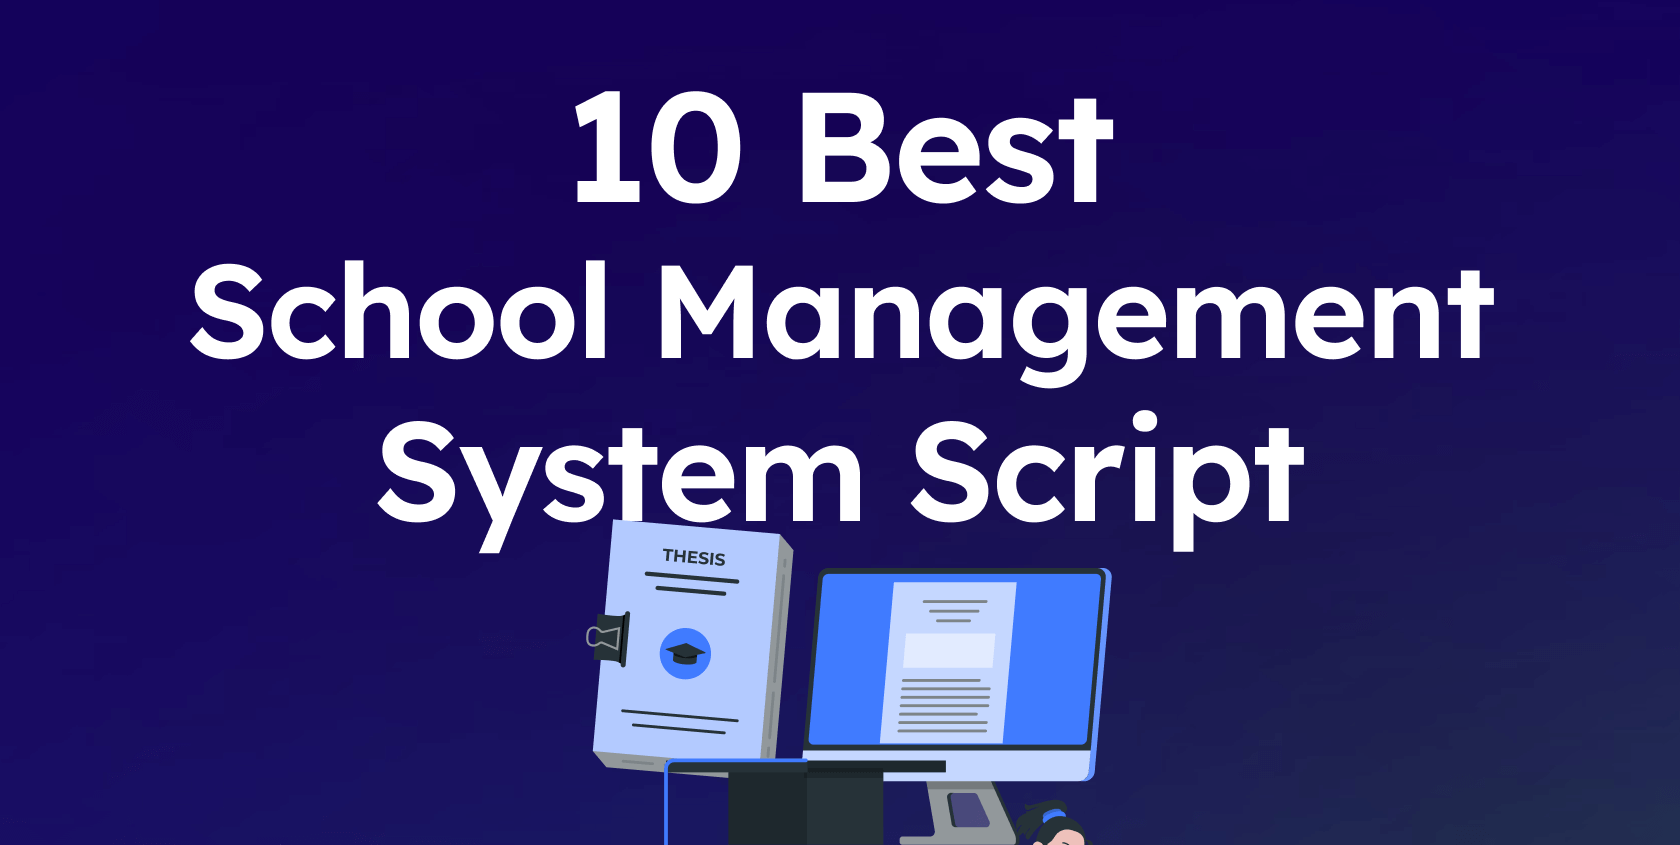 10 Best School Management System Scripts